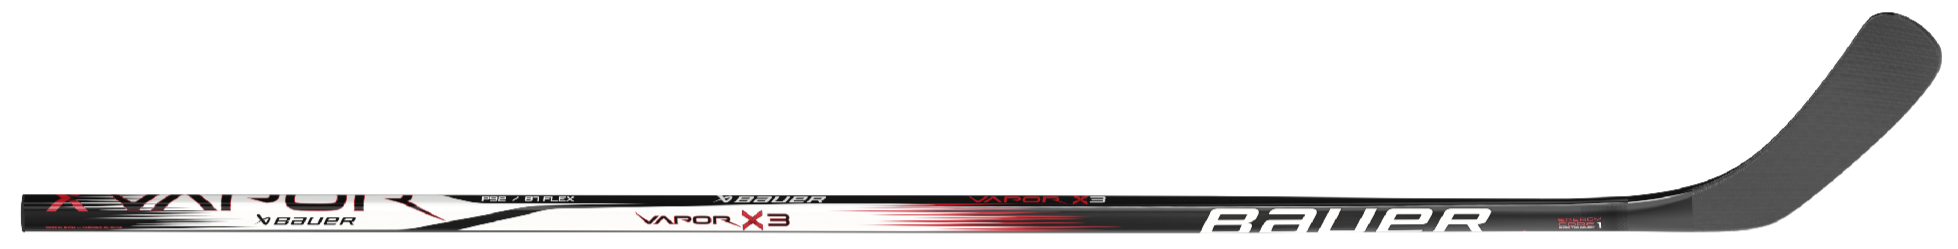 Bauer Vapor X3 Bâtons de Hockey Junior